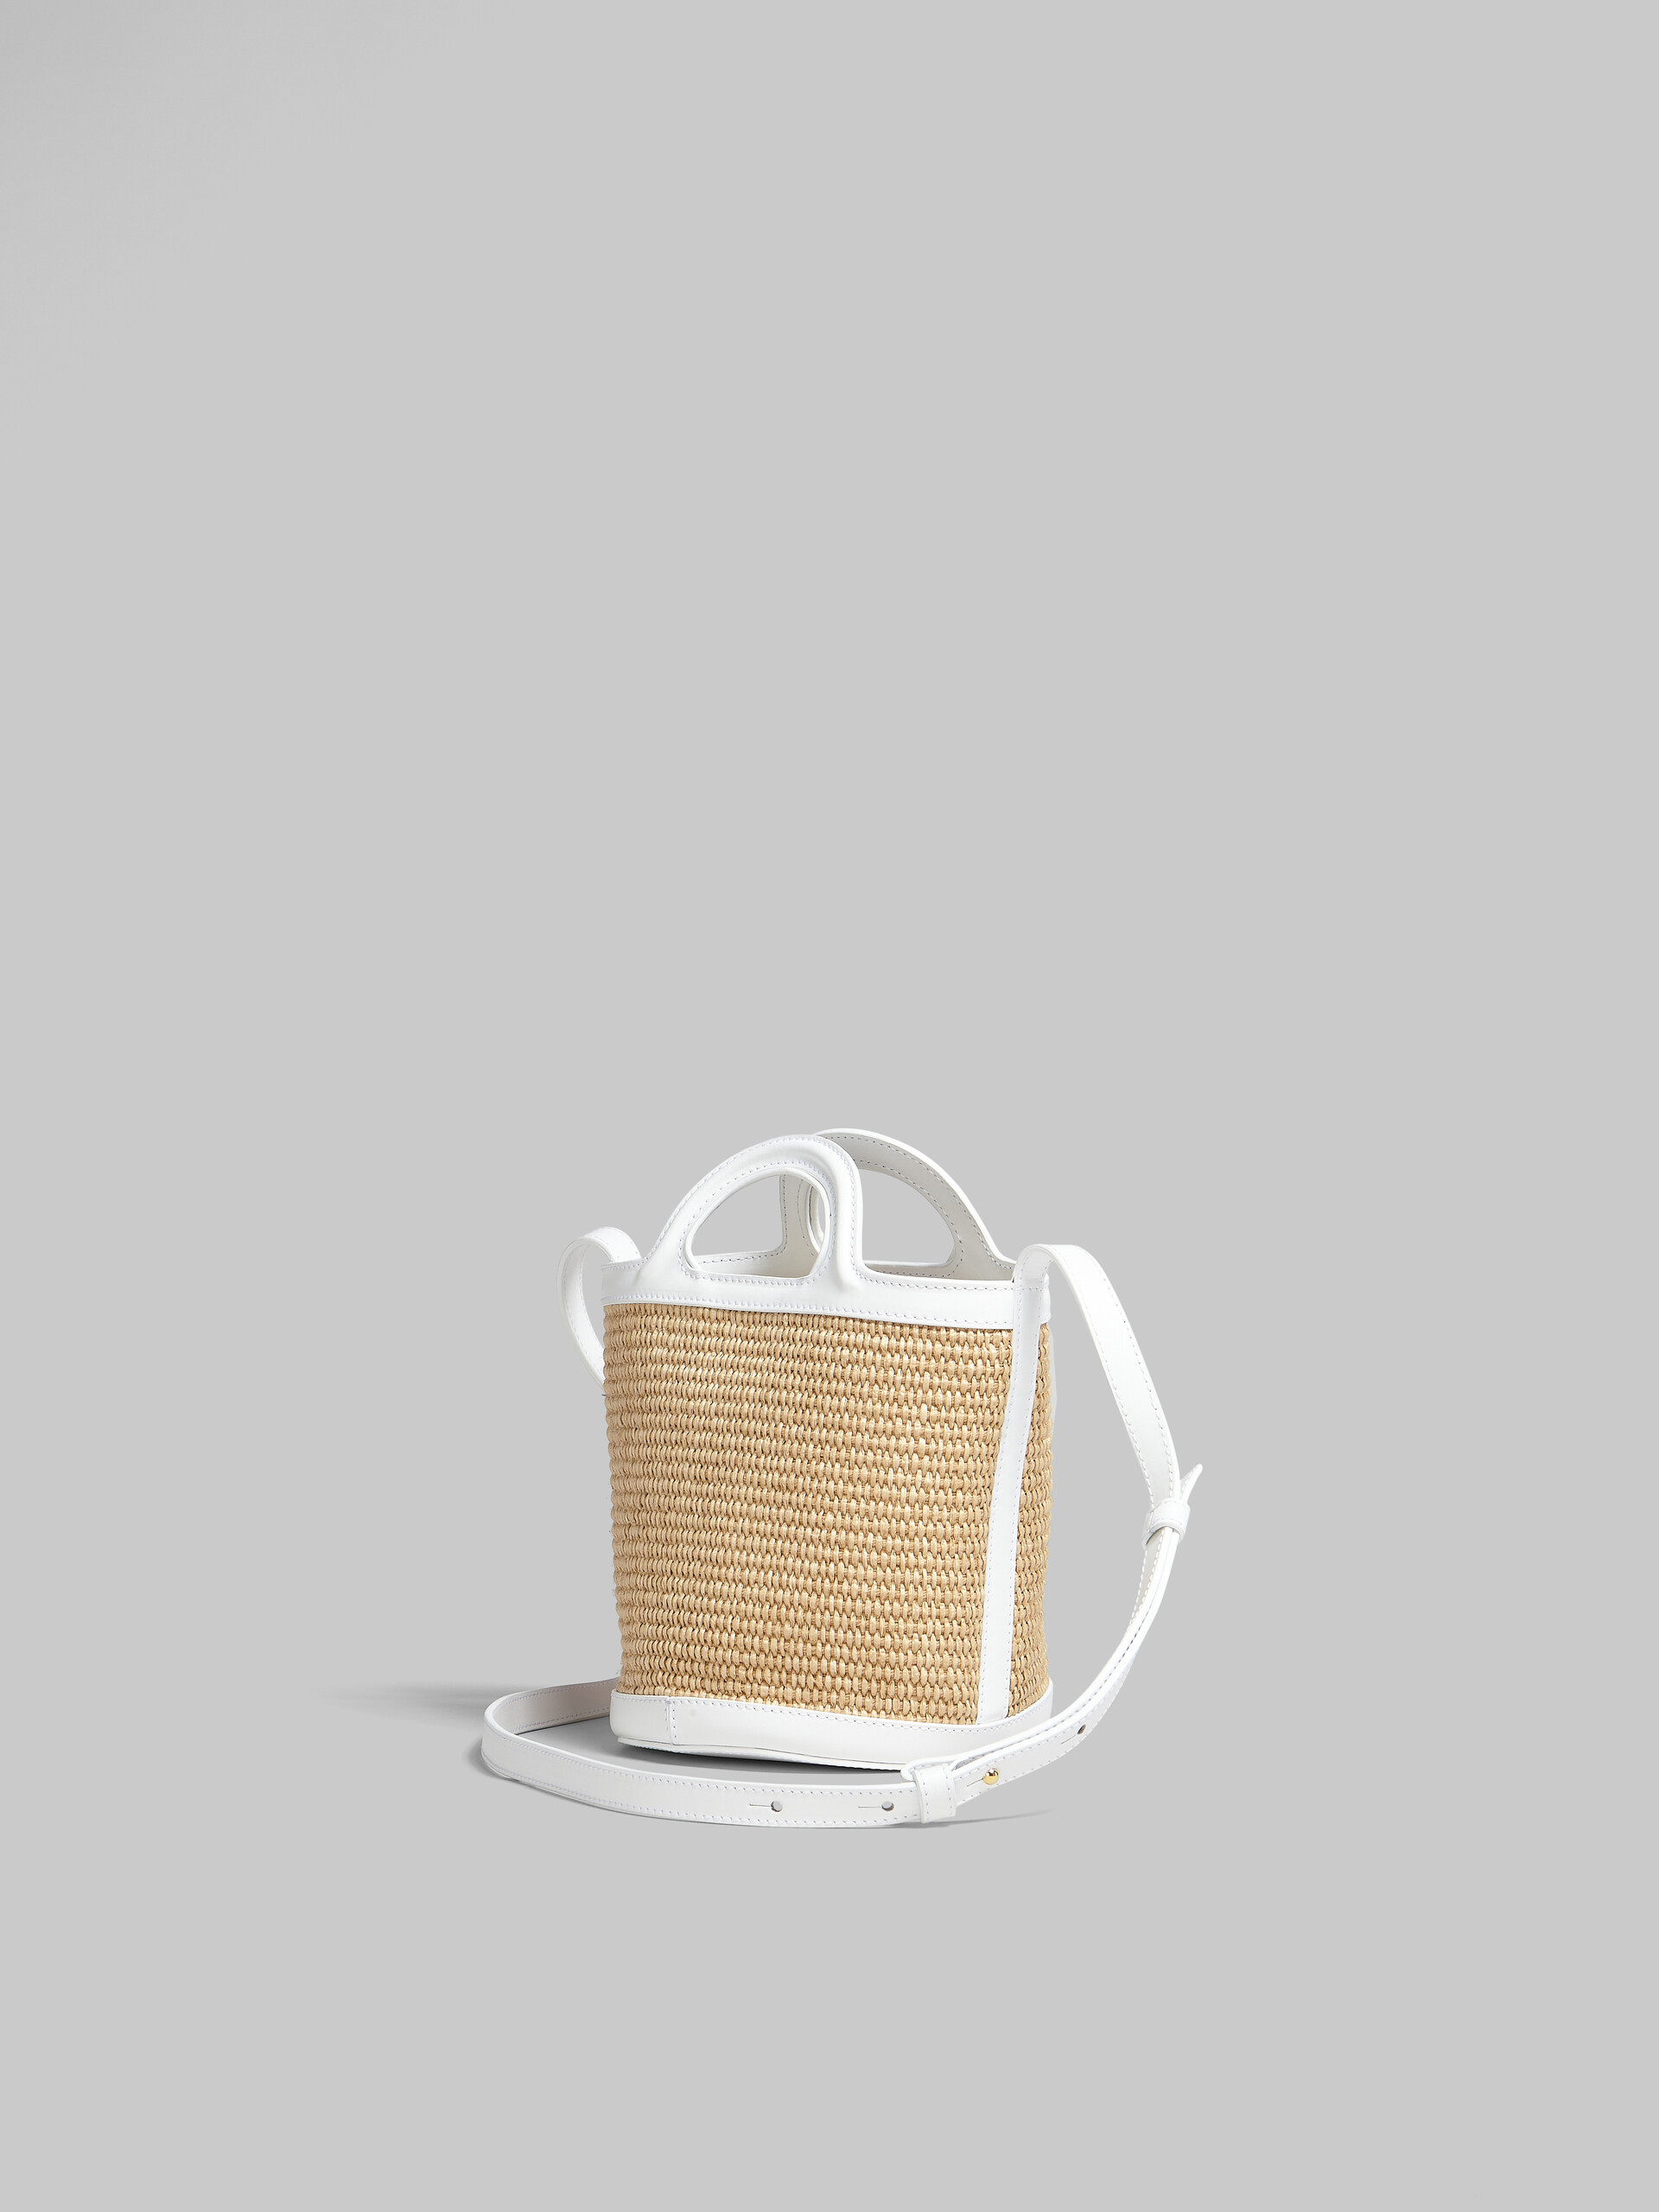 Tropicalia Small Bucket Bag in white leather and raffia | Marni